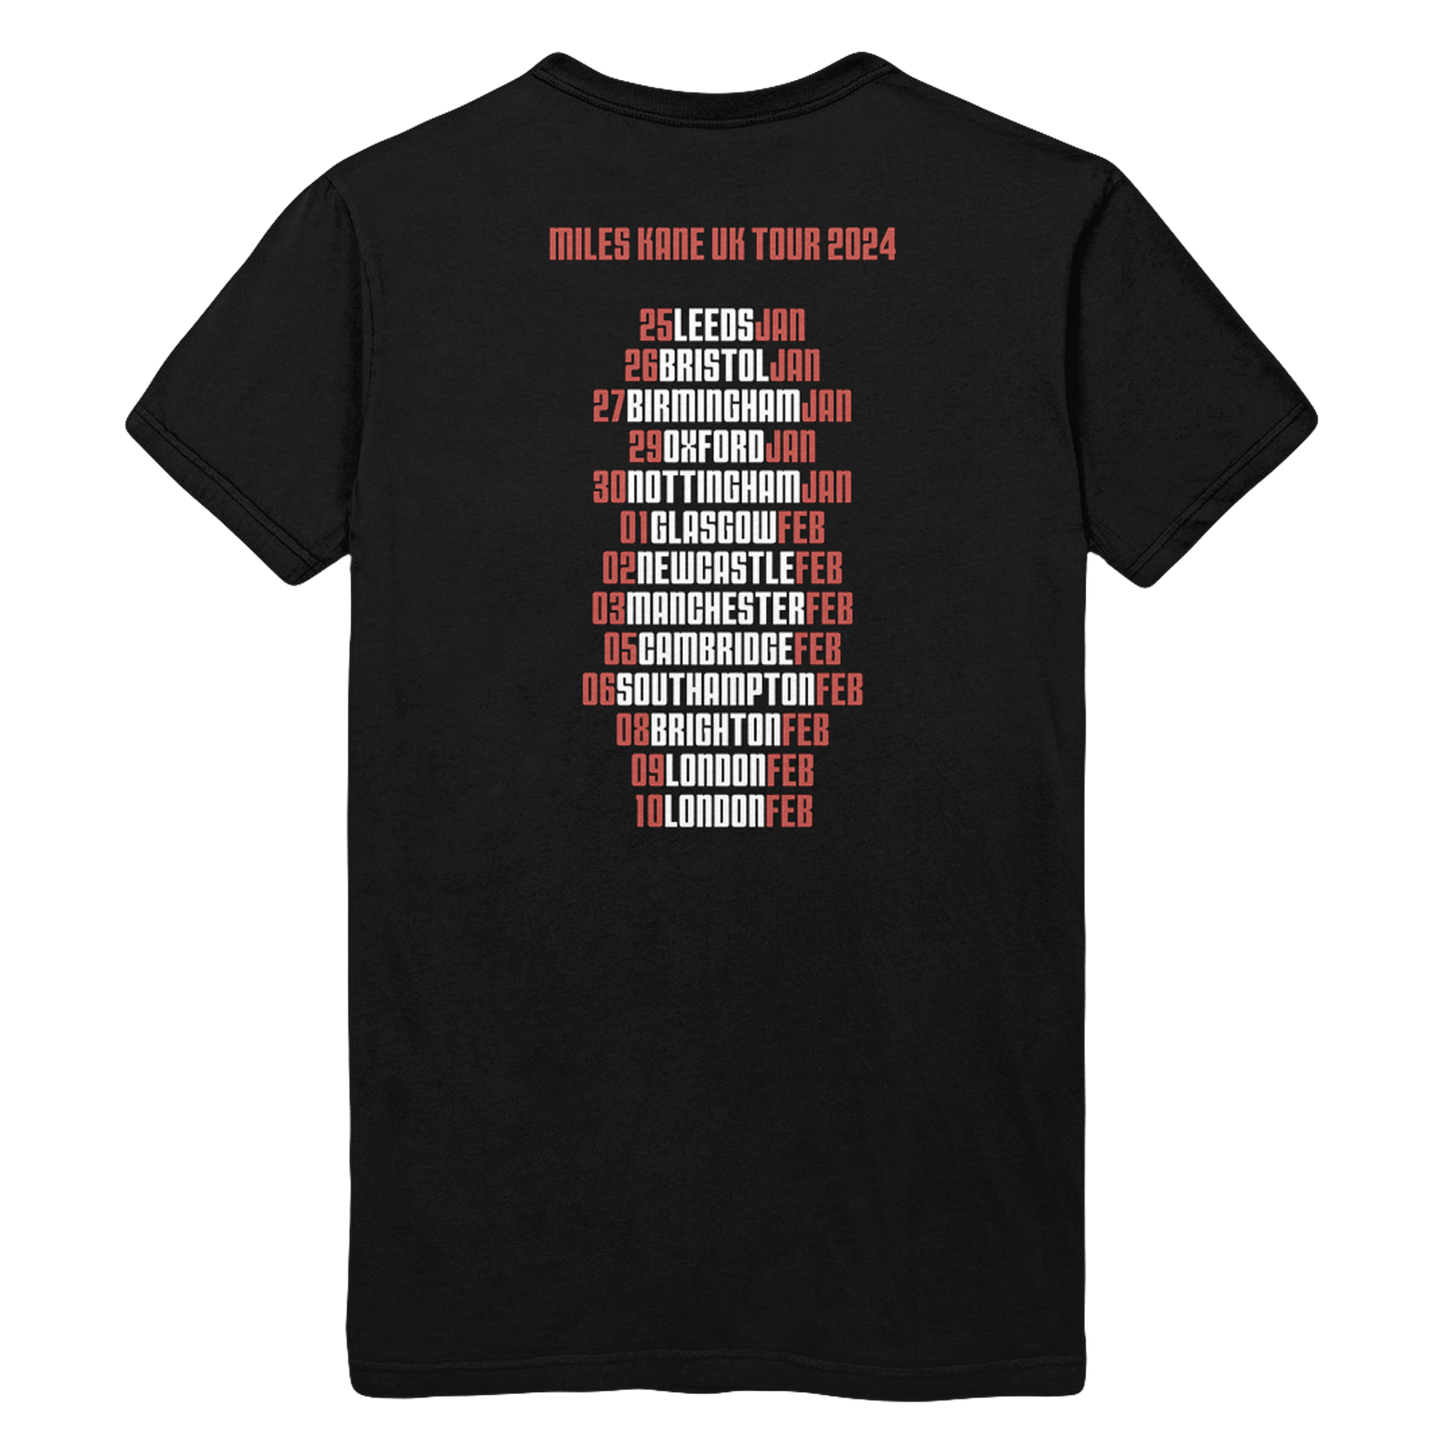 One Man Band Tour T-Shirt